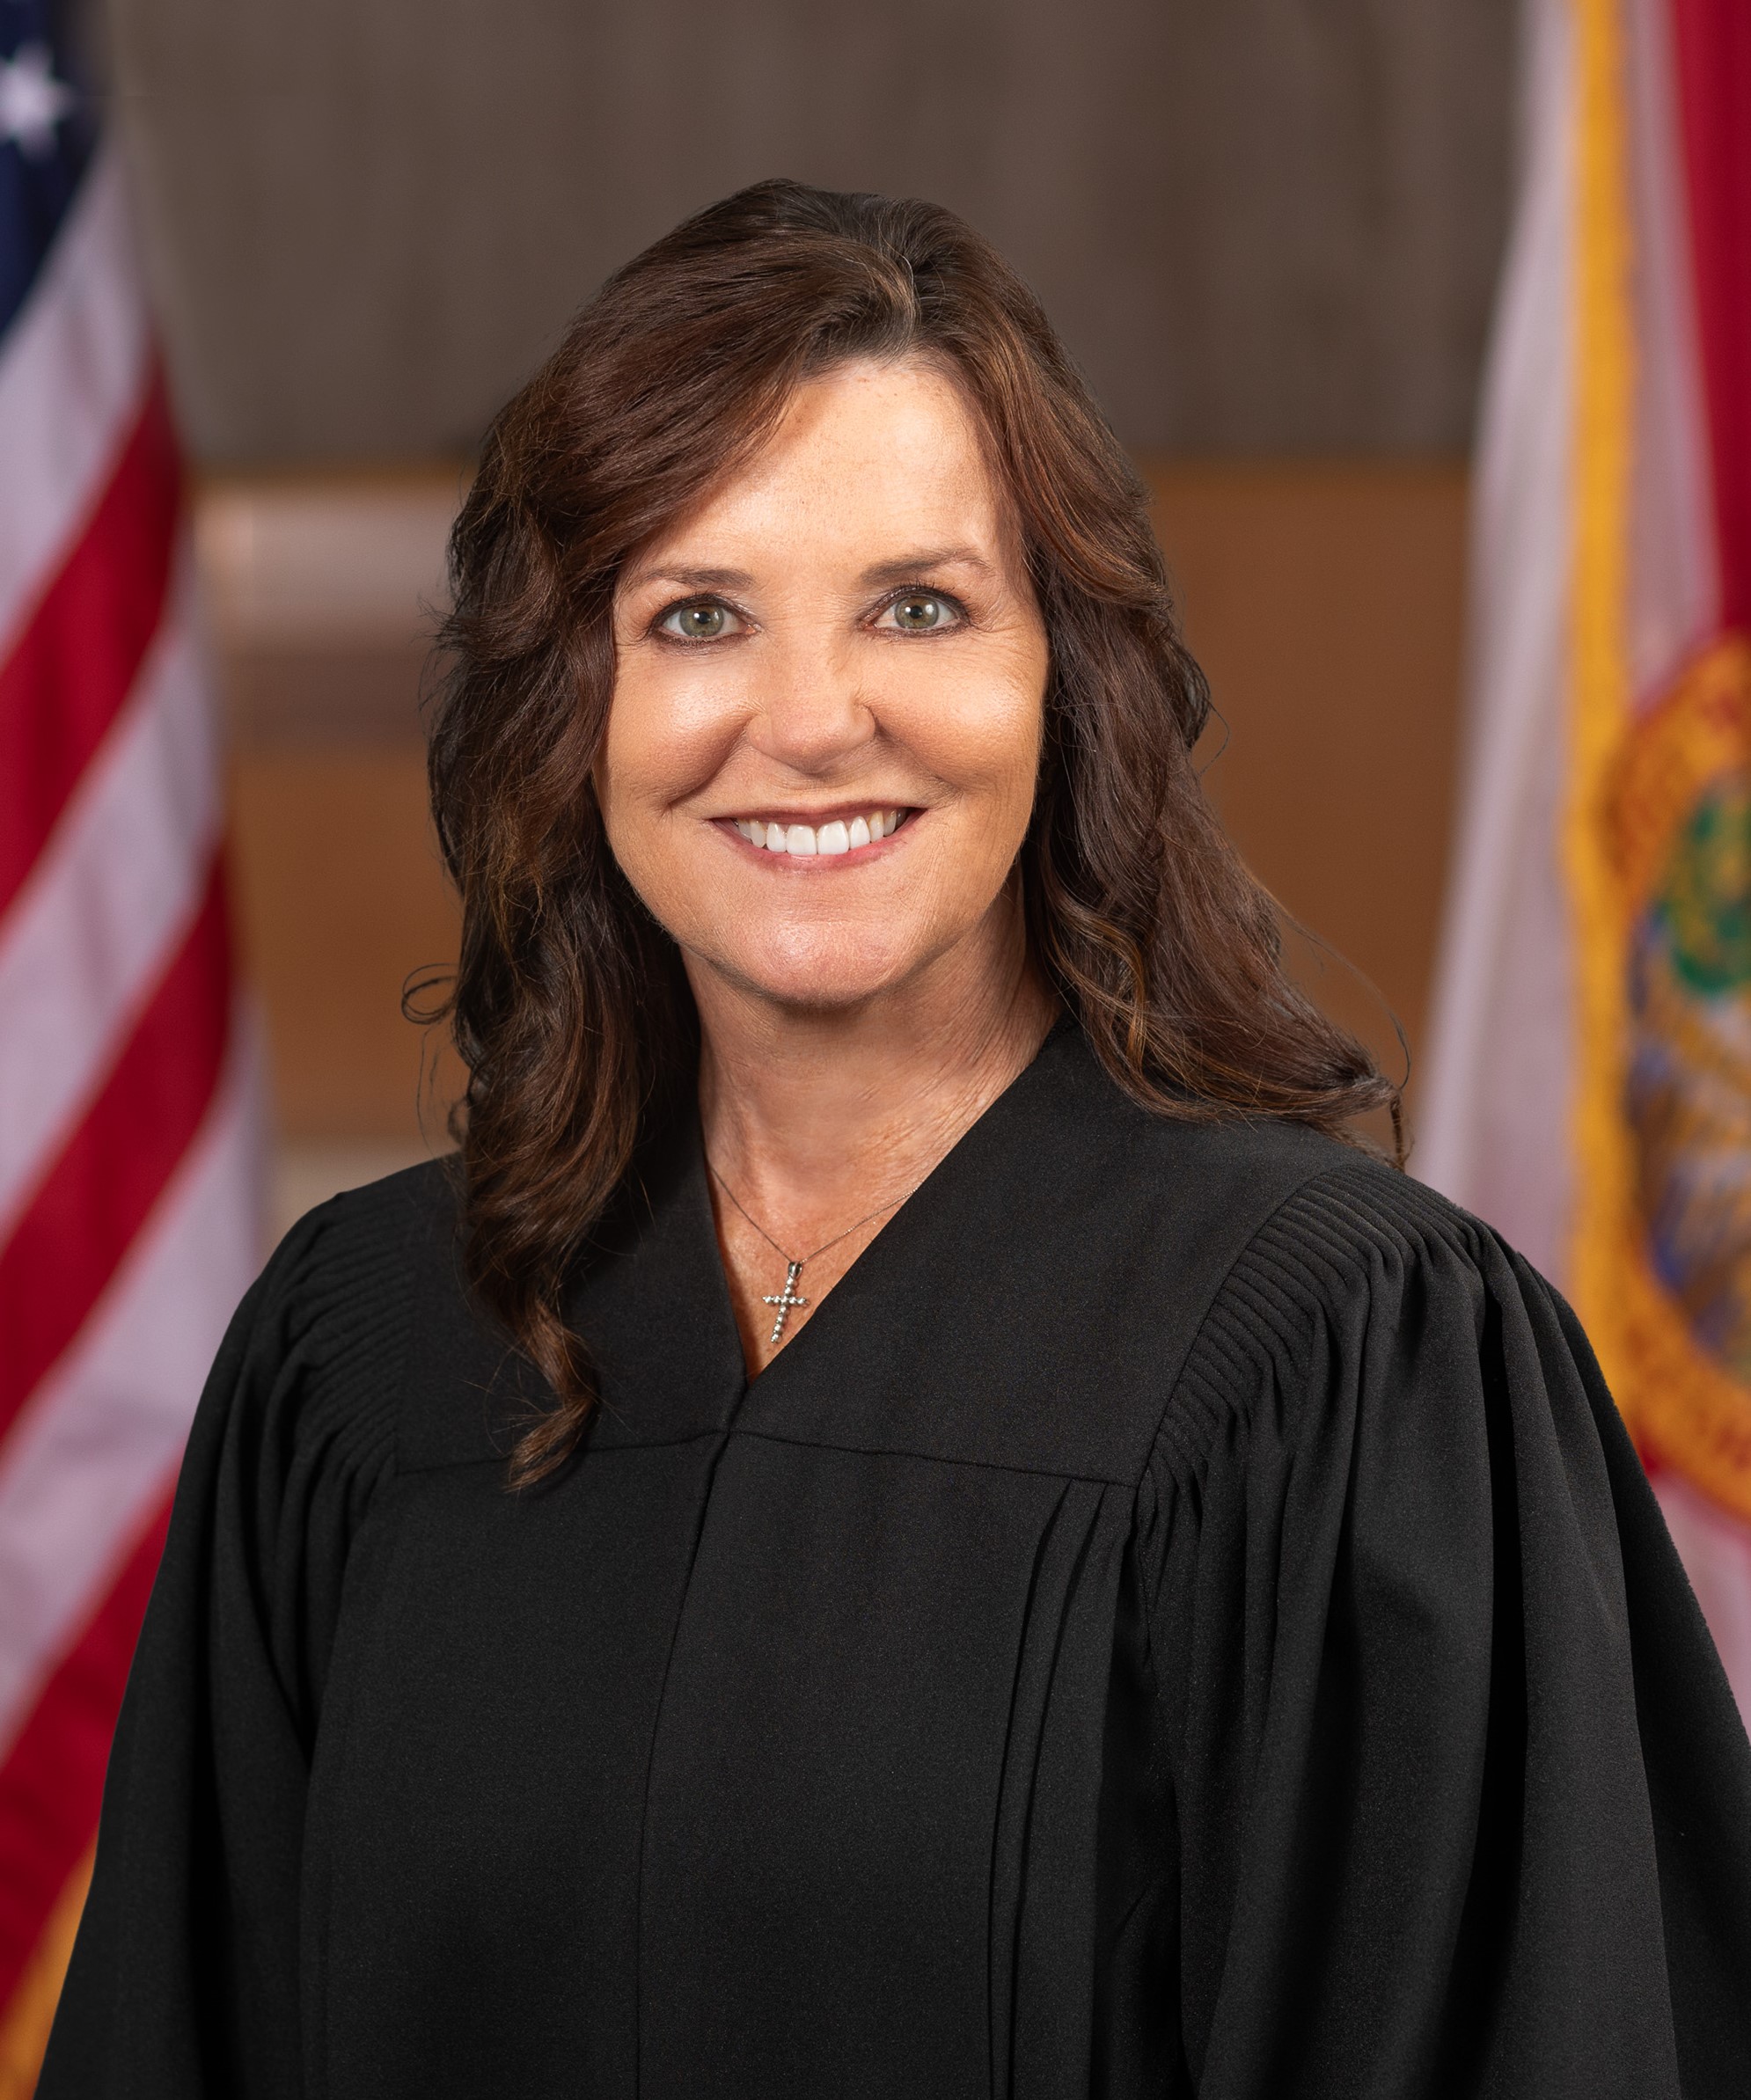 Portrait of Judge Susan L. Barber